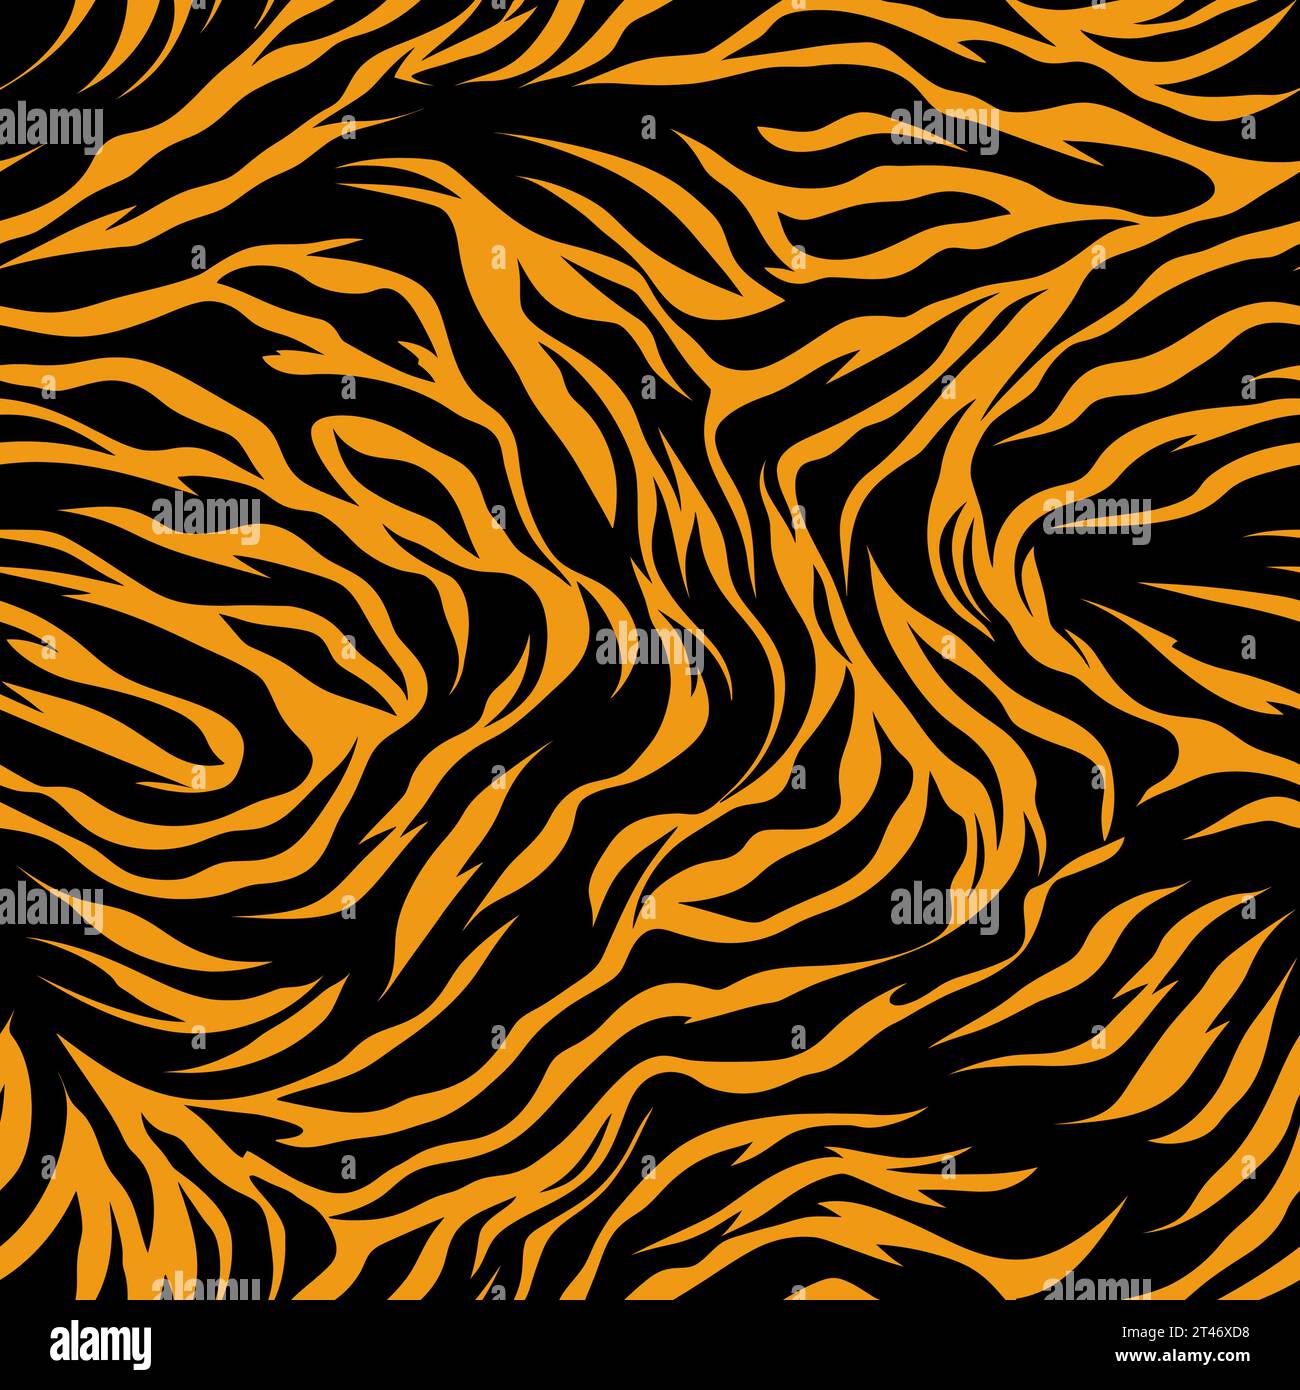 https://c8.alamy.com/comp/2T46XD8/a-beige-and-black-animal-print-seamless-pattern-vector-illustration-2T46XD8.jpg